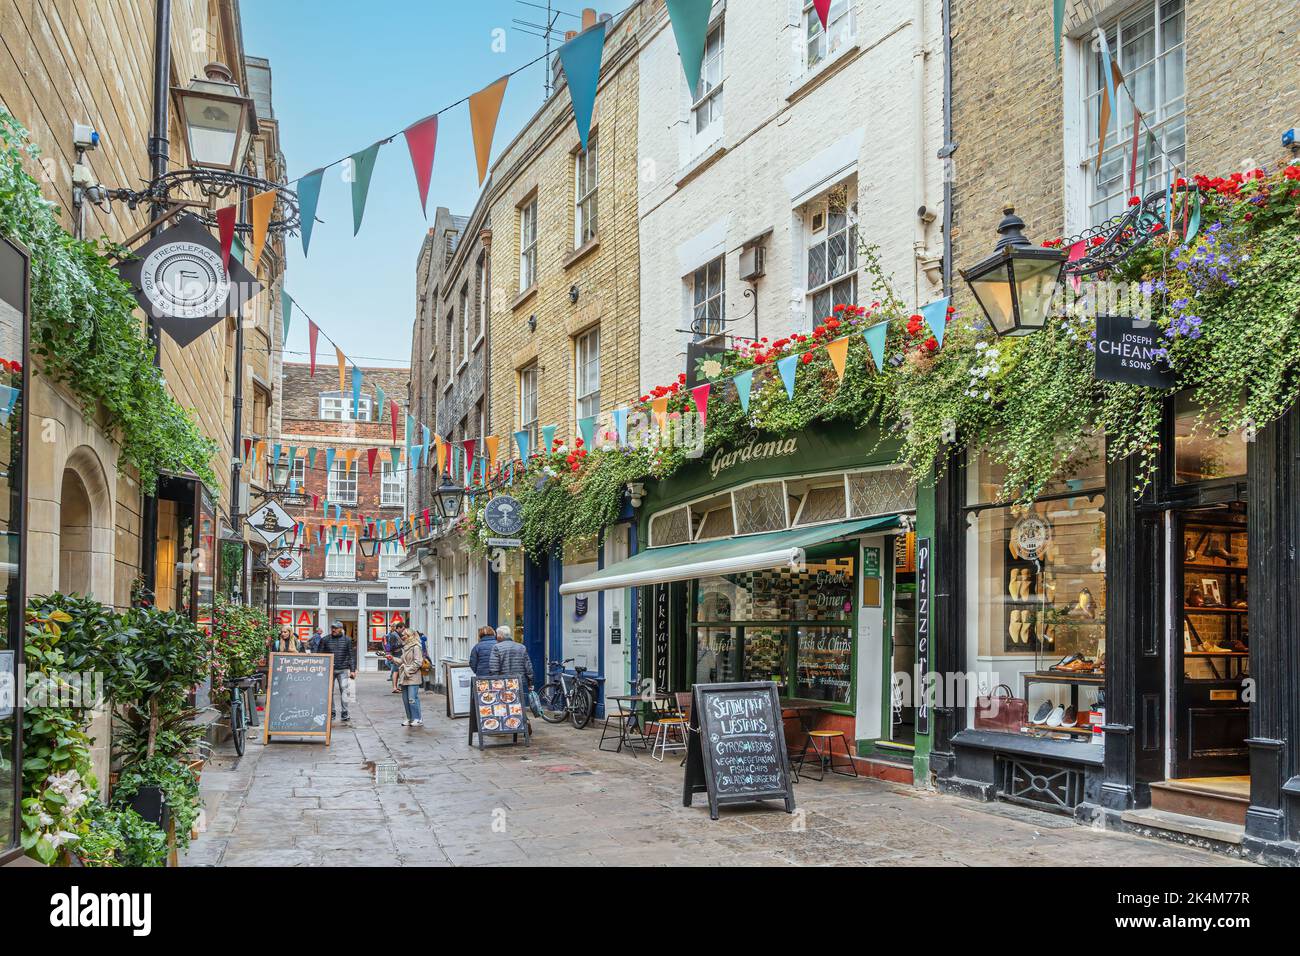 Typical street scene in Cambridge England Stock Photo